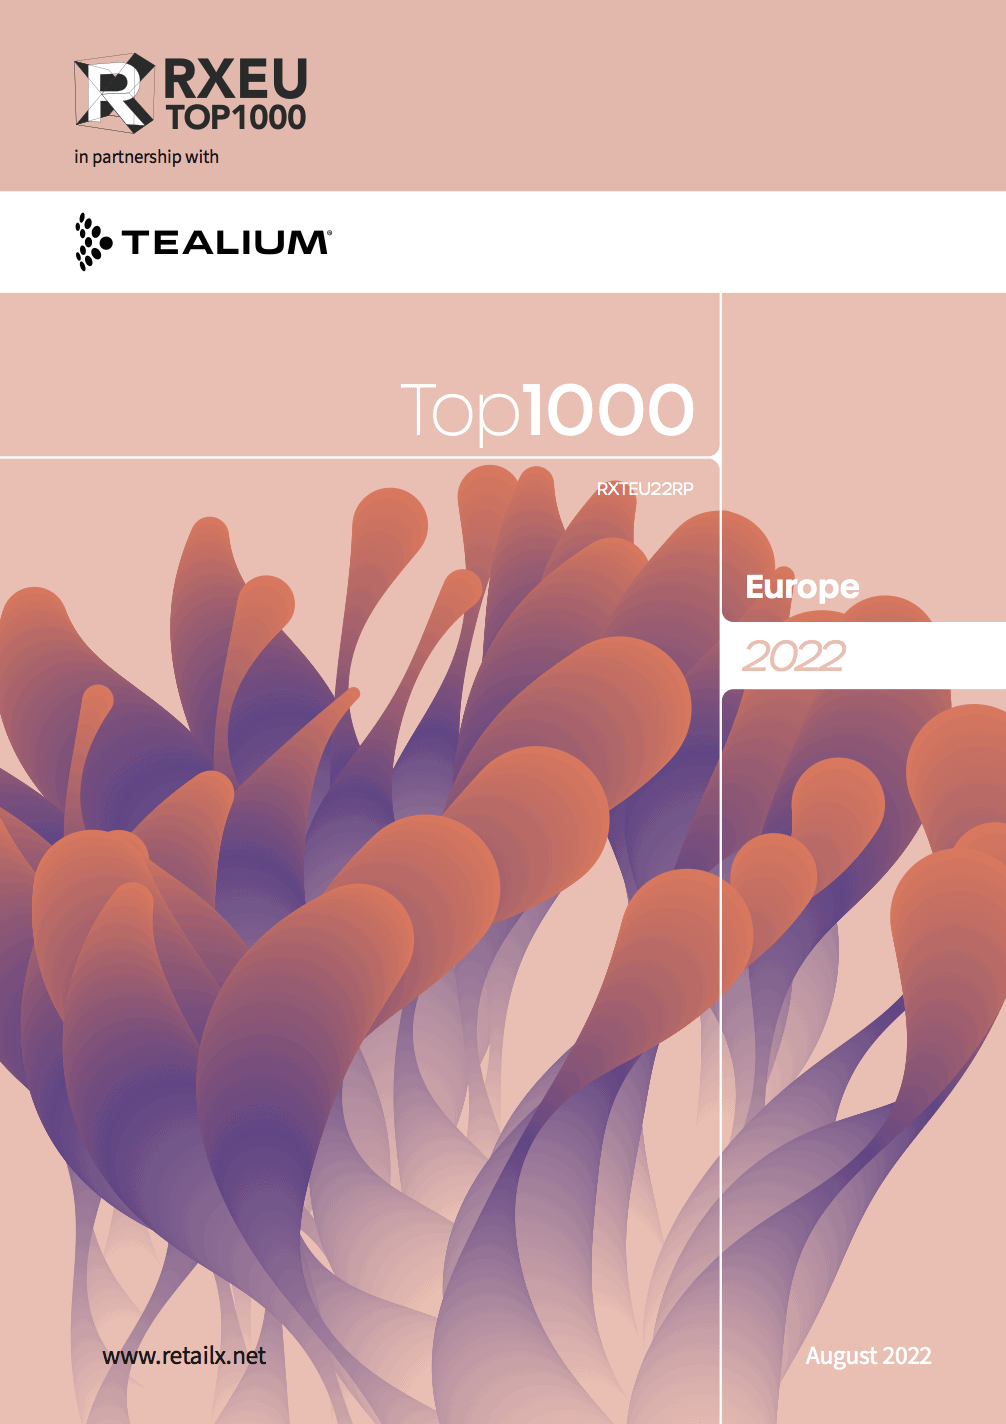 The 2022 RetailX Europe Top1000